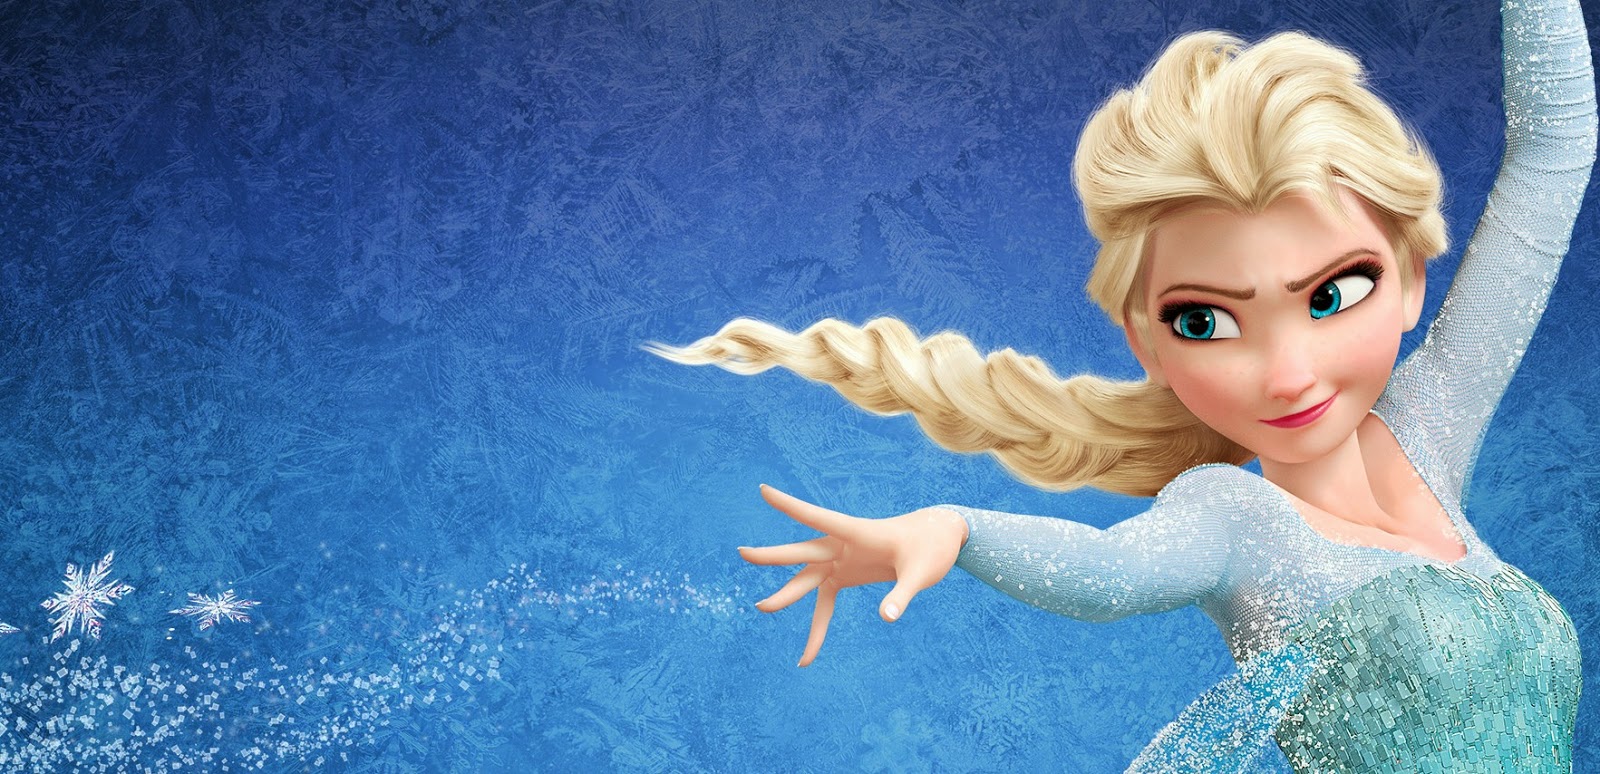 Gambar Lirik Lagu Disney Frozen Gambar Bergerak Dp Bbm Di Rebanas